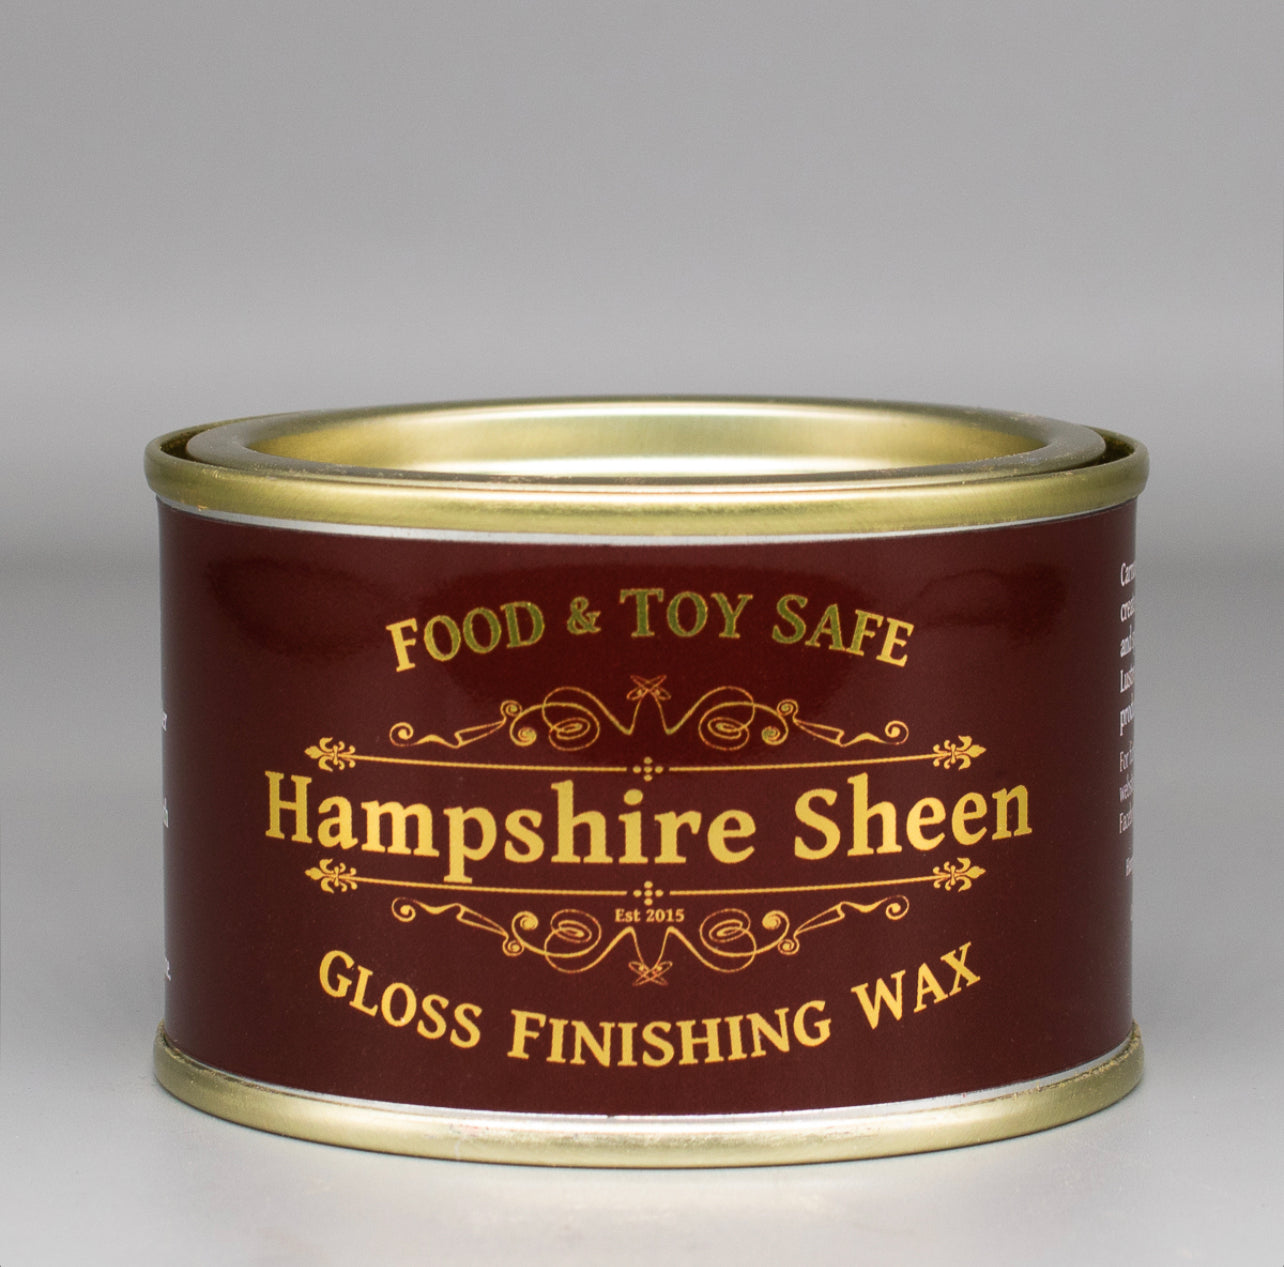 Gloss Finishing Wax | Food & Toy Safe | Hampshire Sheen